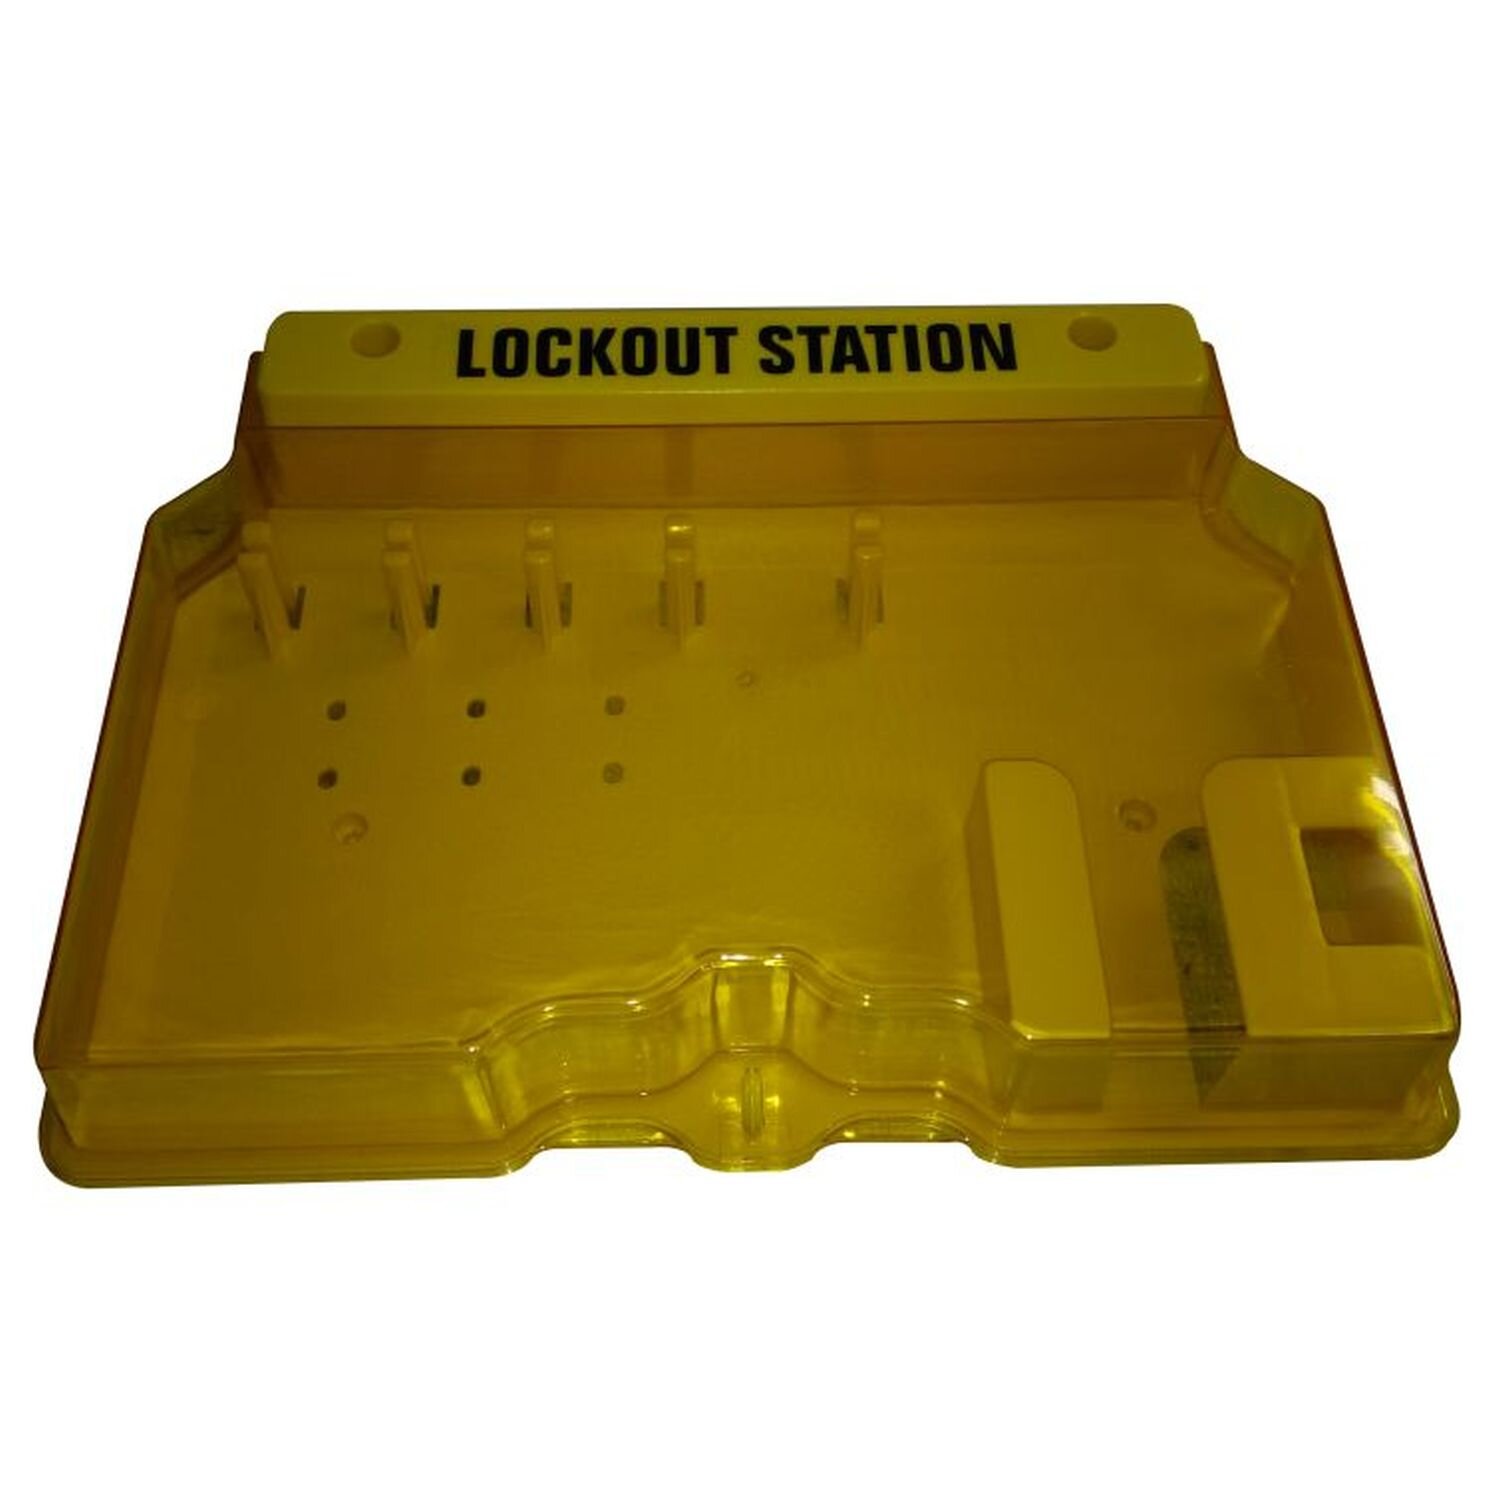 Lockout Station Holds 5-10 Locks